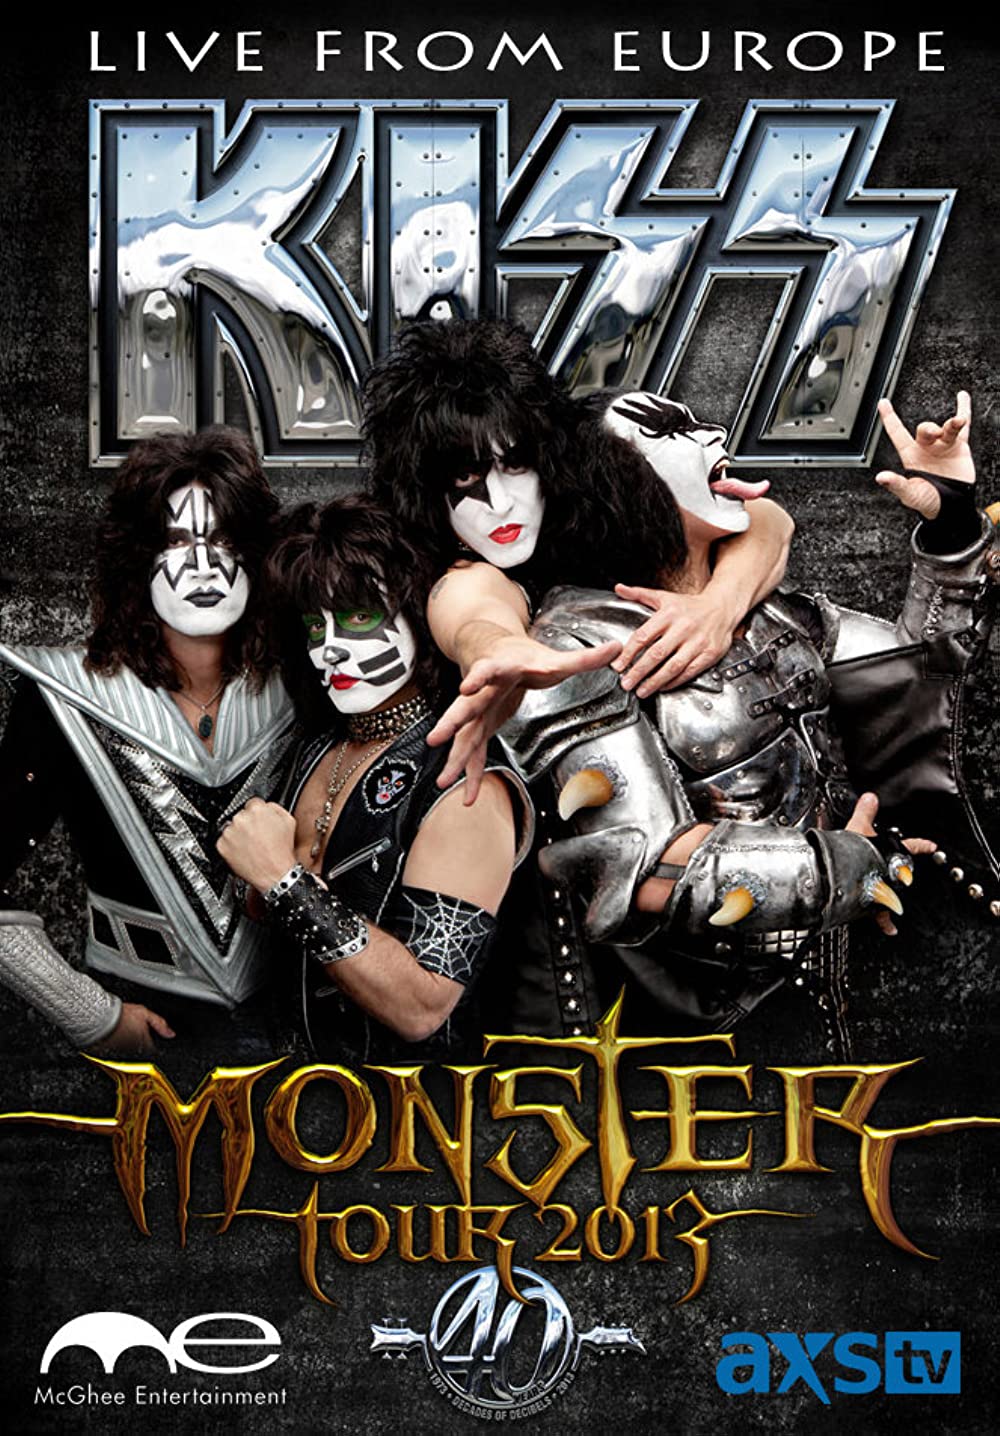 KISS 2012-2013 Monster World Tour CZECH REPUBLIC  Commemorative City Guitar Picks